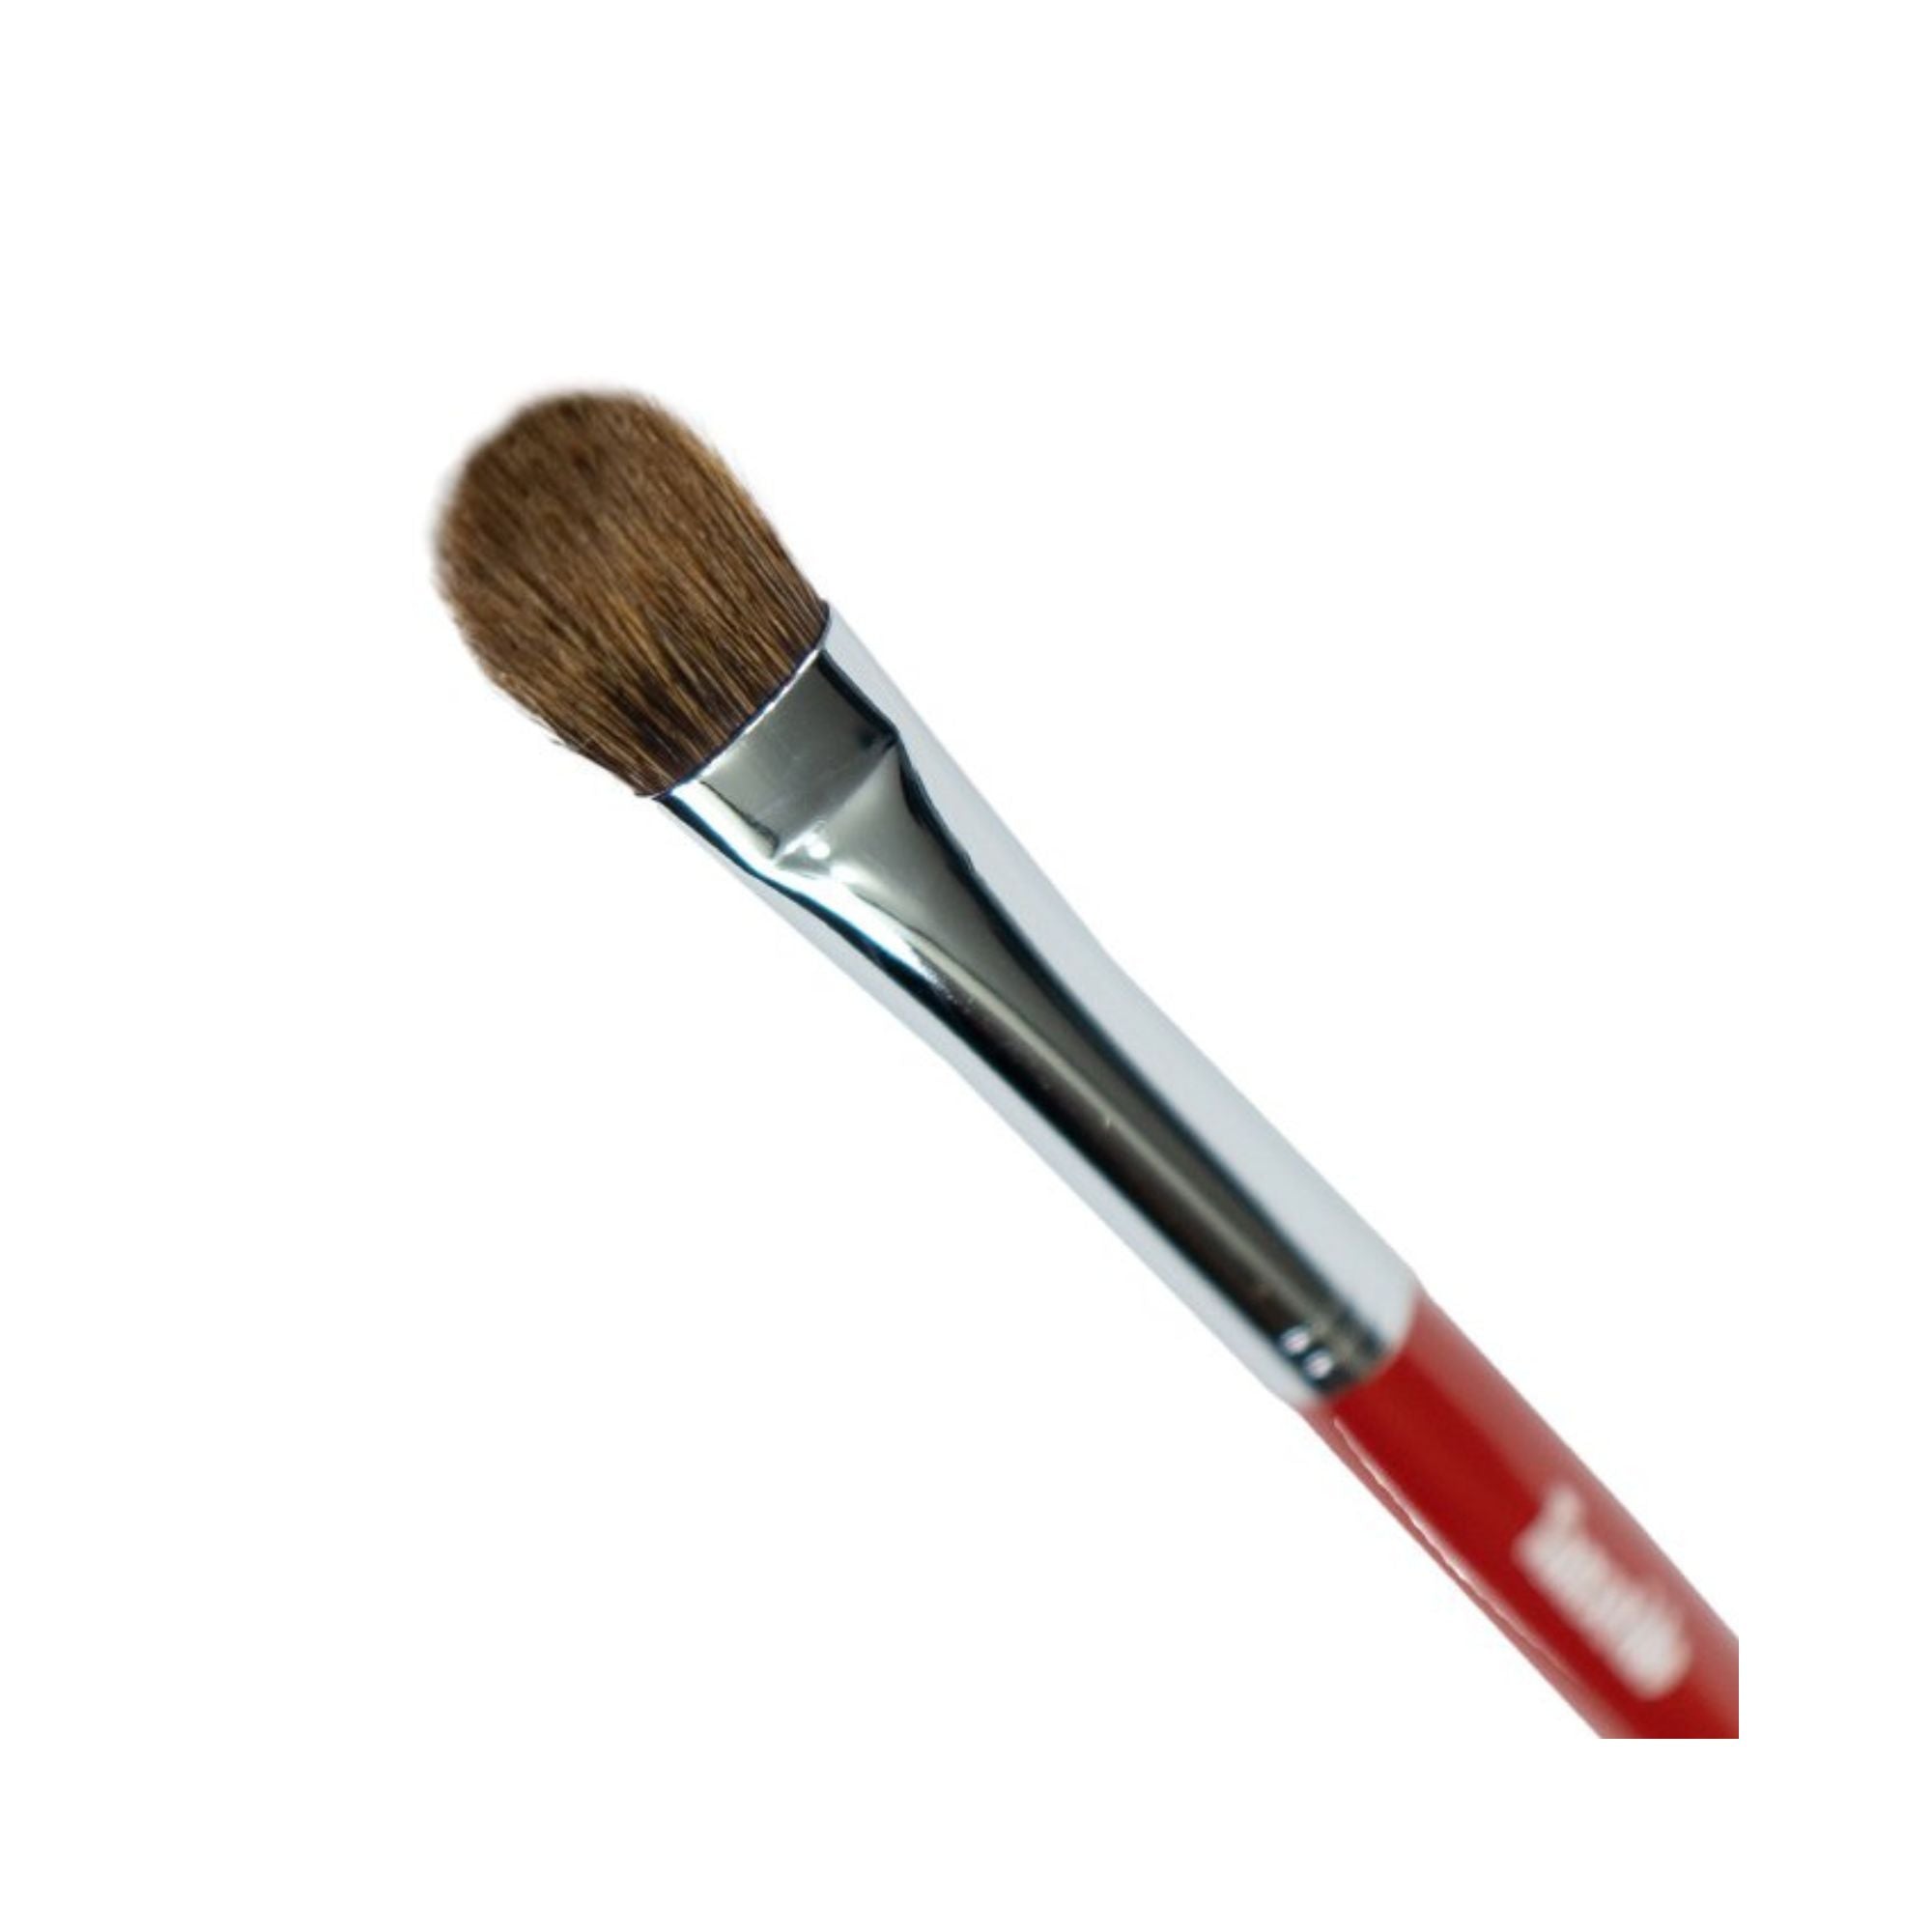 Tanseido CQ 10SP Eyeshadow Brush - Fude Beauty, Japanese Makeup Brushes